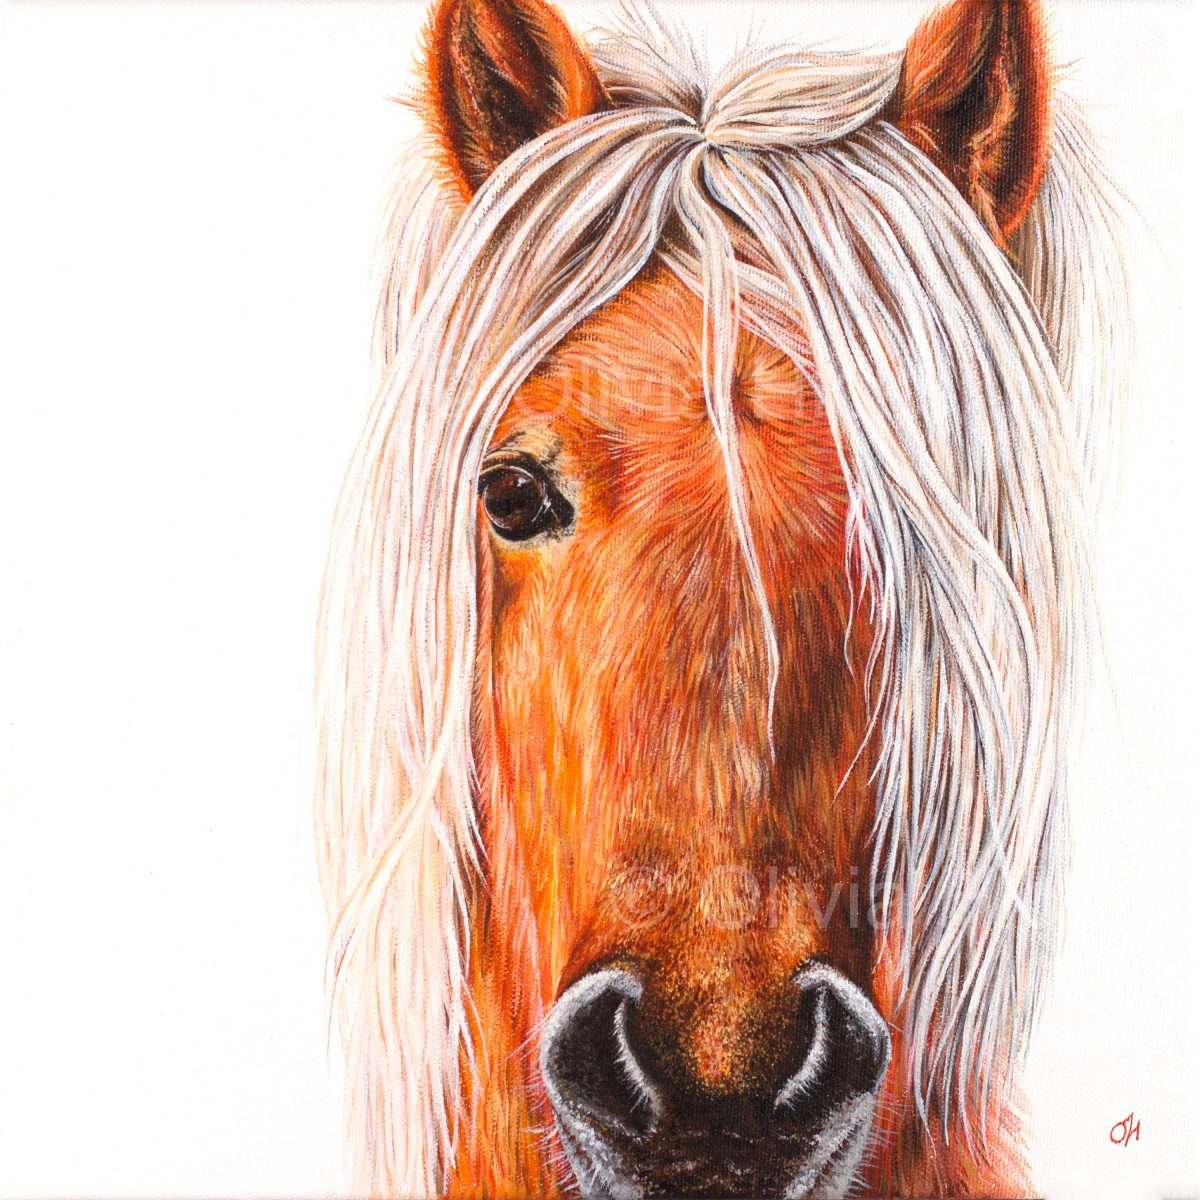 Dartmoor Pony - limited edition giclée canvas print